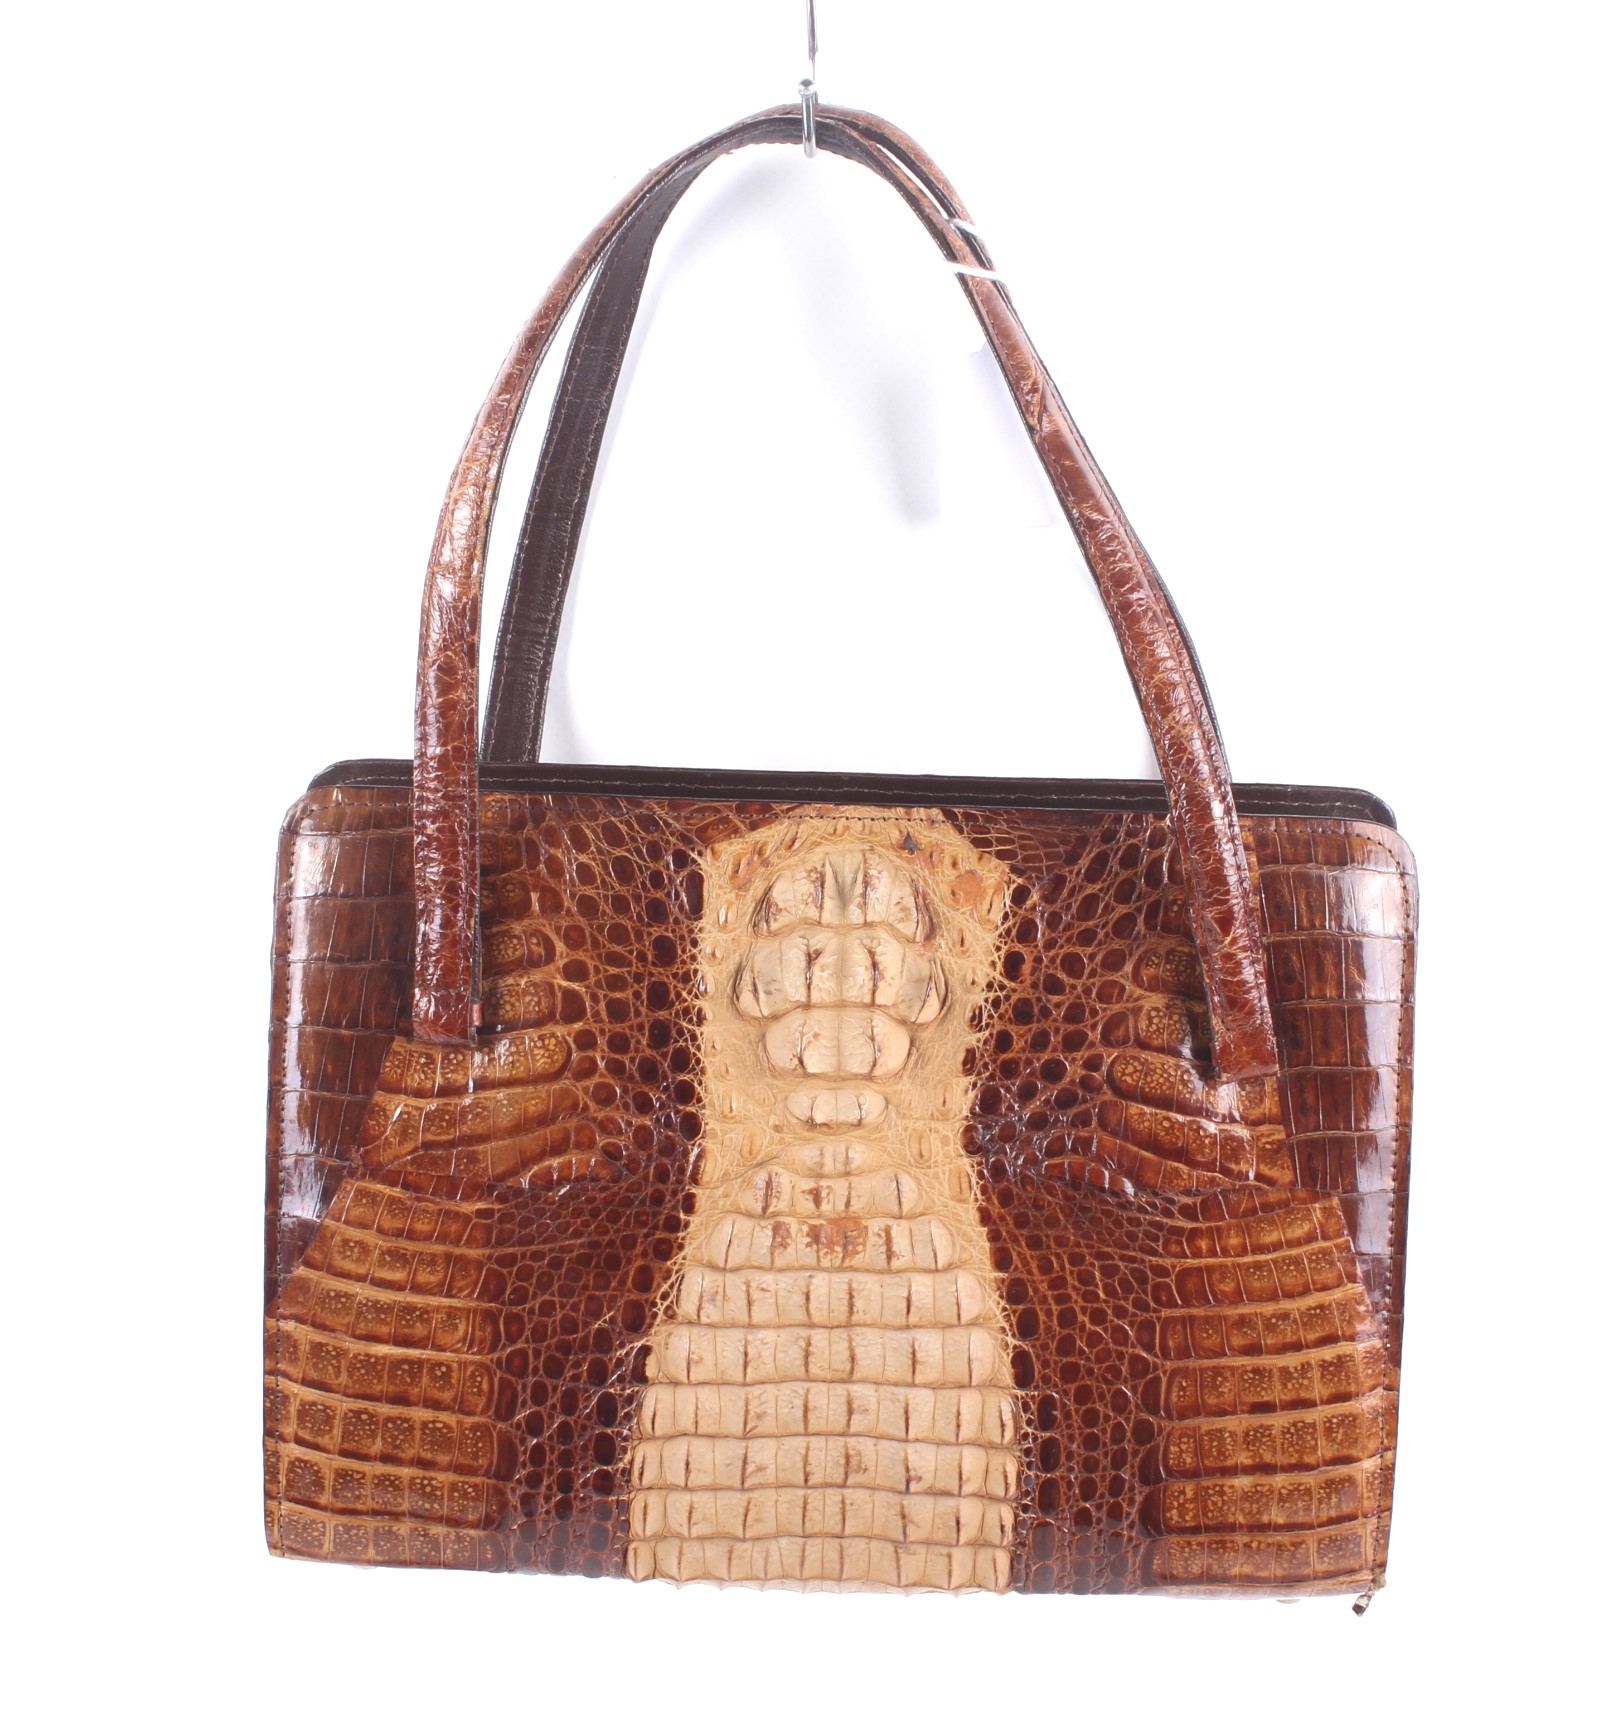 A vintage brown crocodile skin handbag and purse.